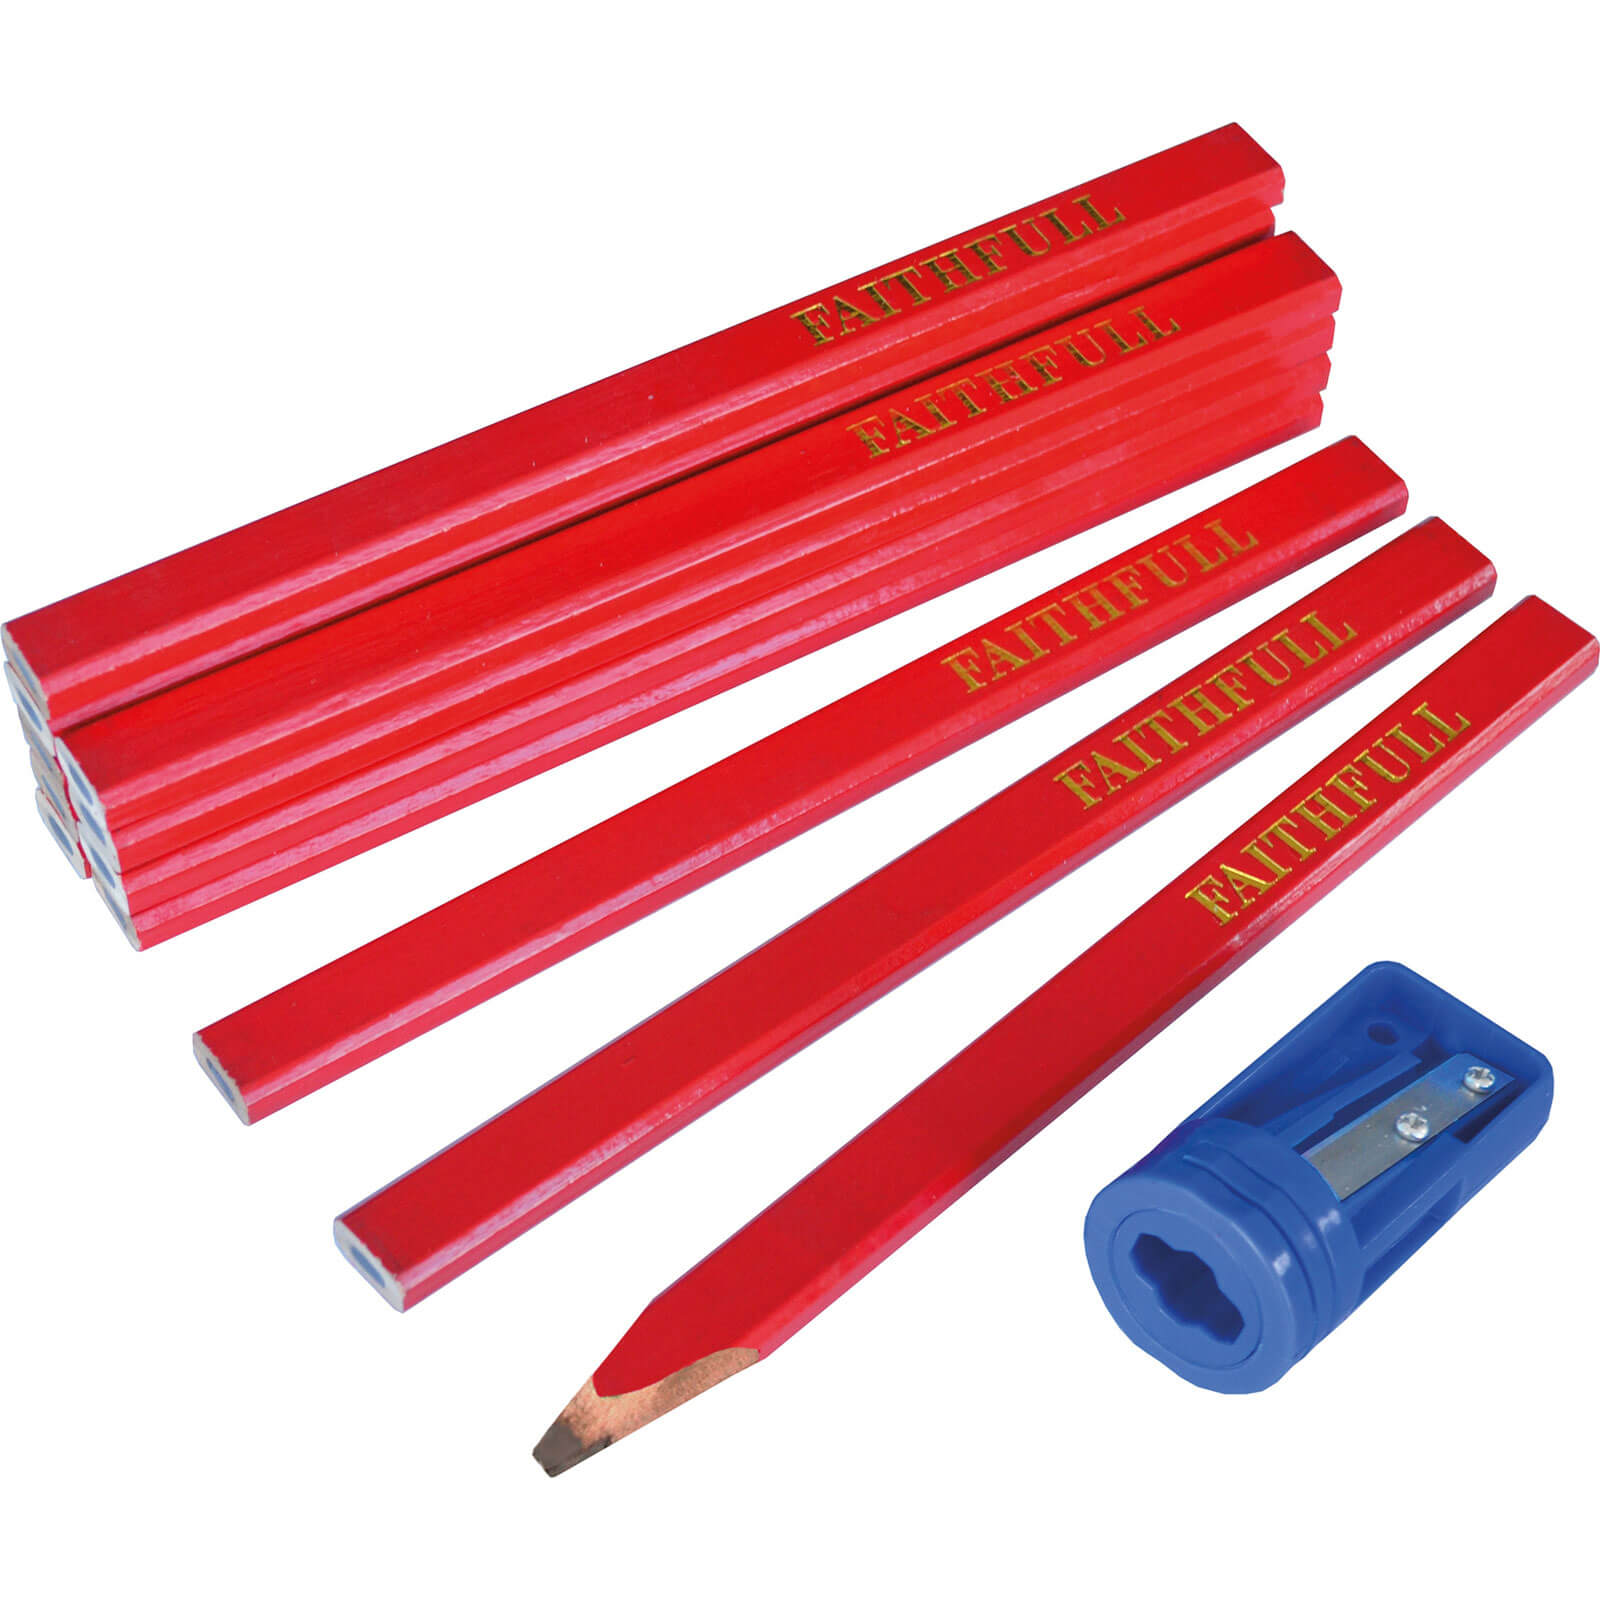 Image of Faithfull 13 Piece Carpenters Pencil and Sharpener Set